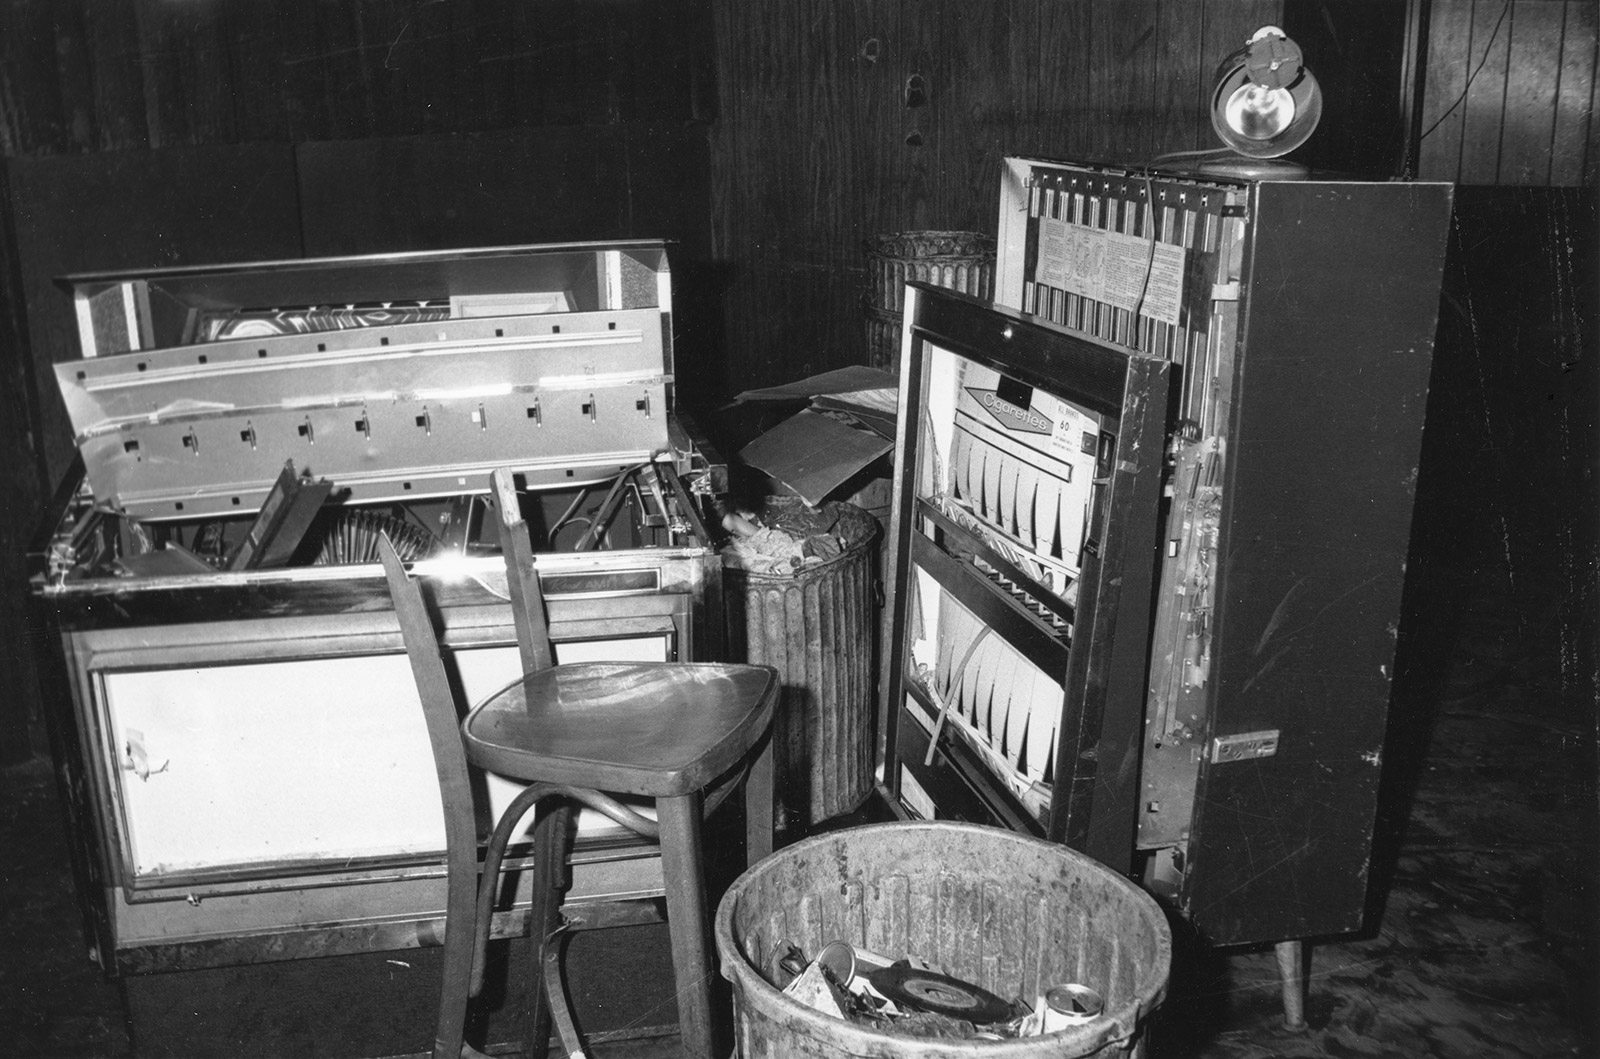 Black and white photo showing a damaged juke box, barstool, and cigarette machine.